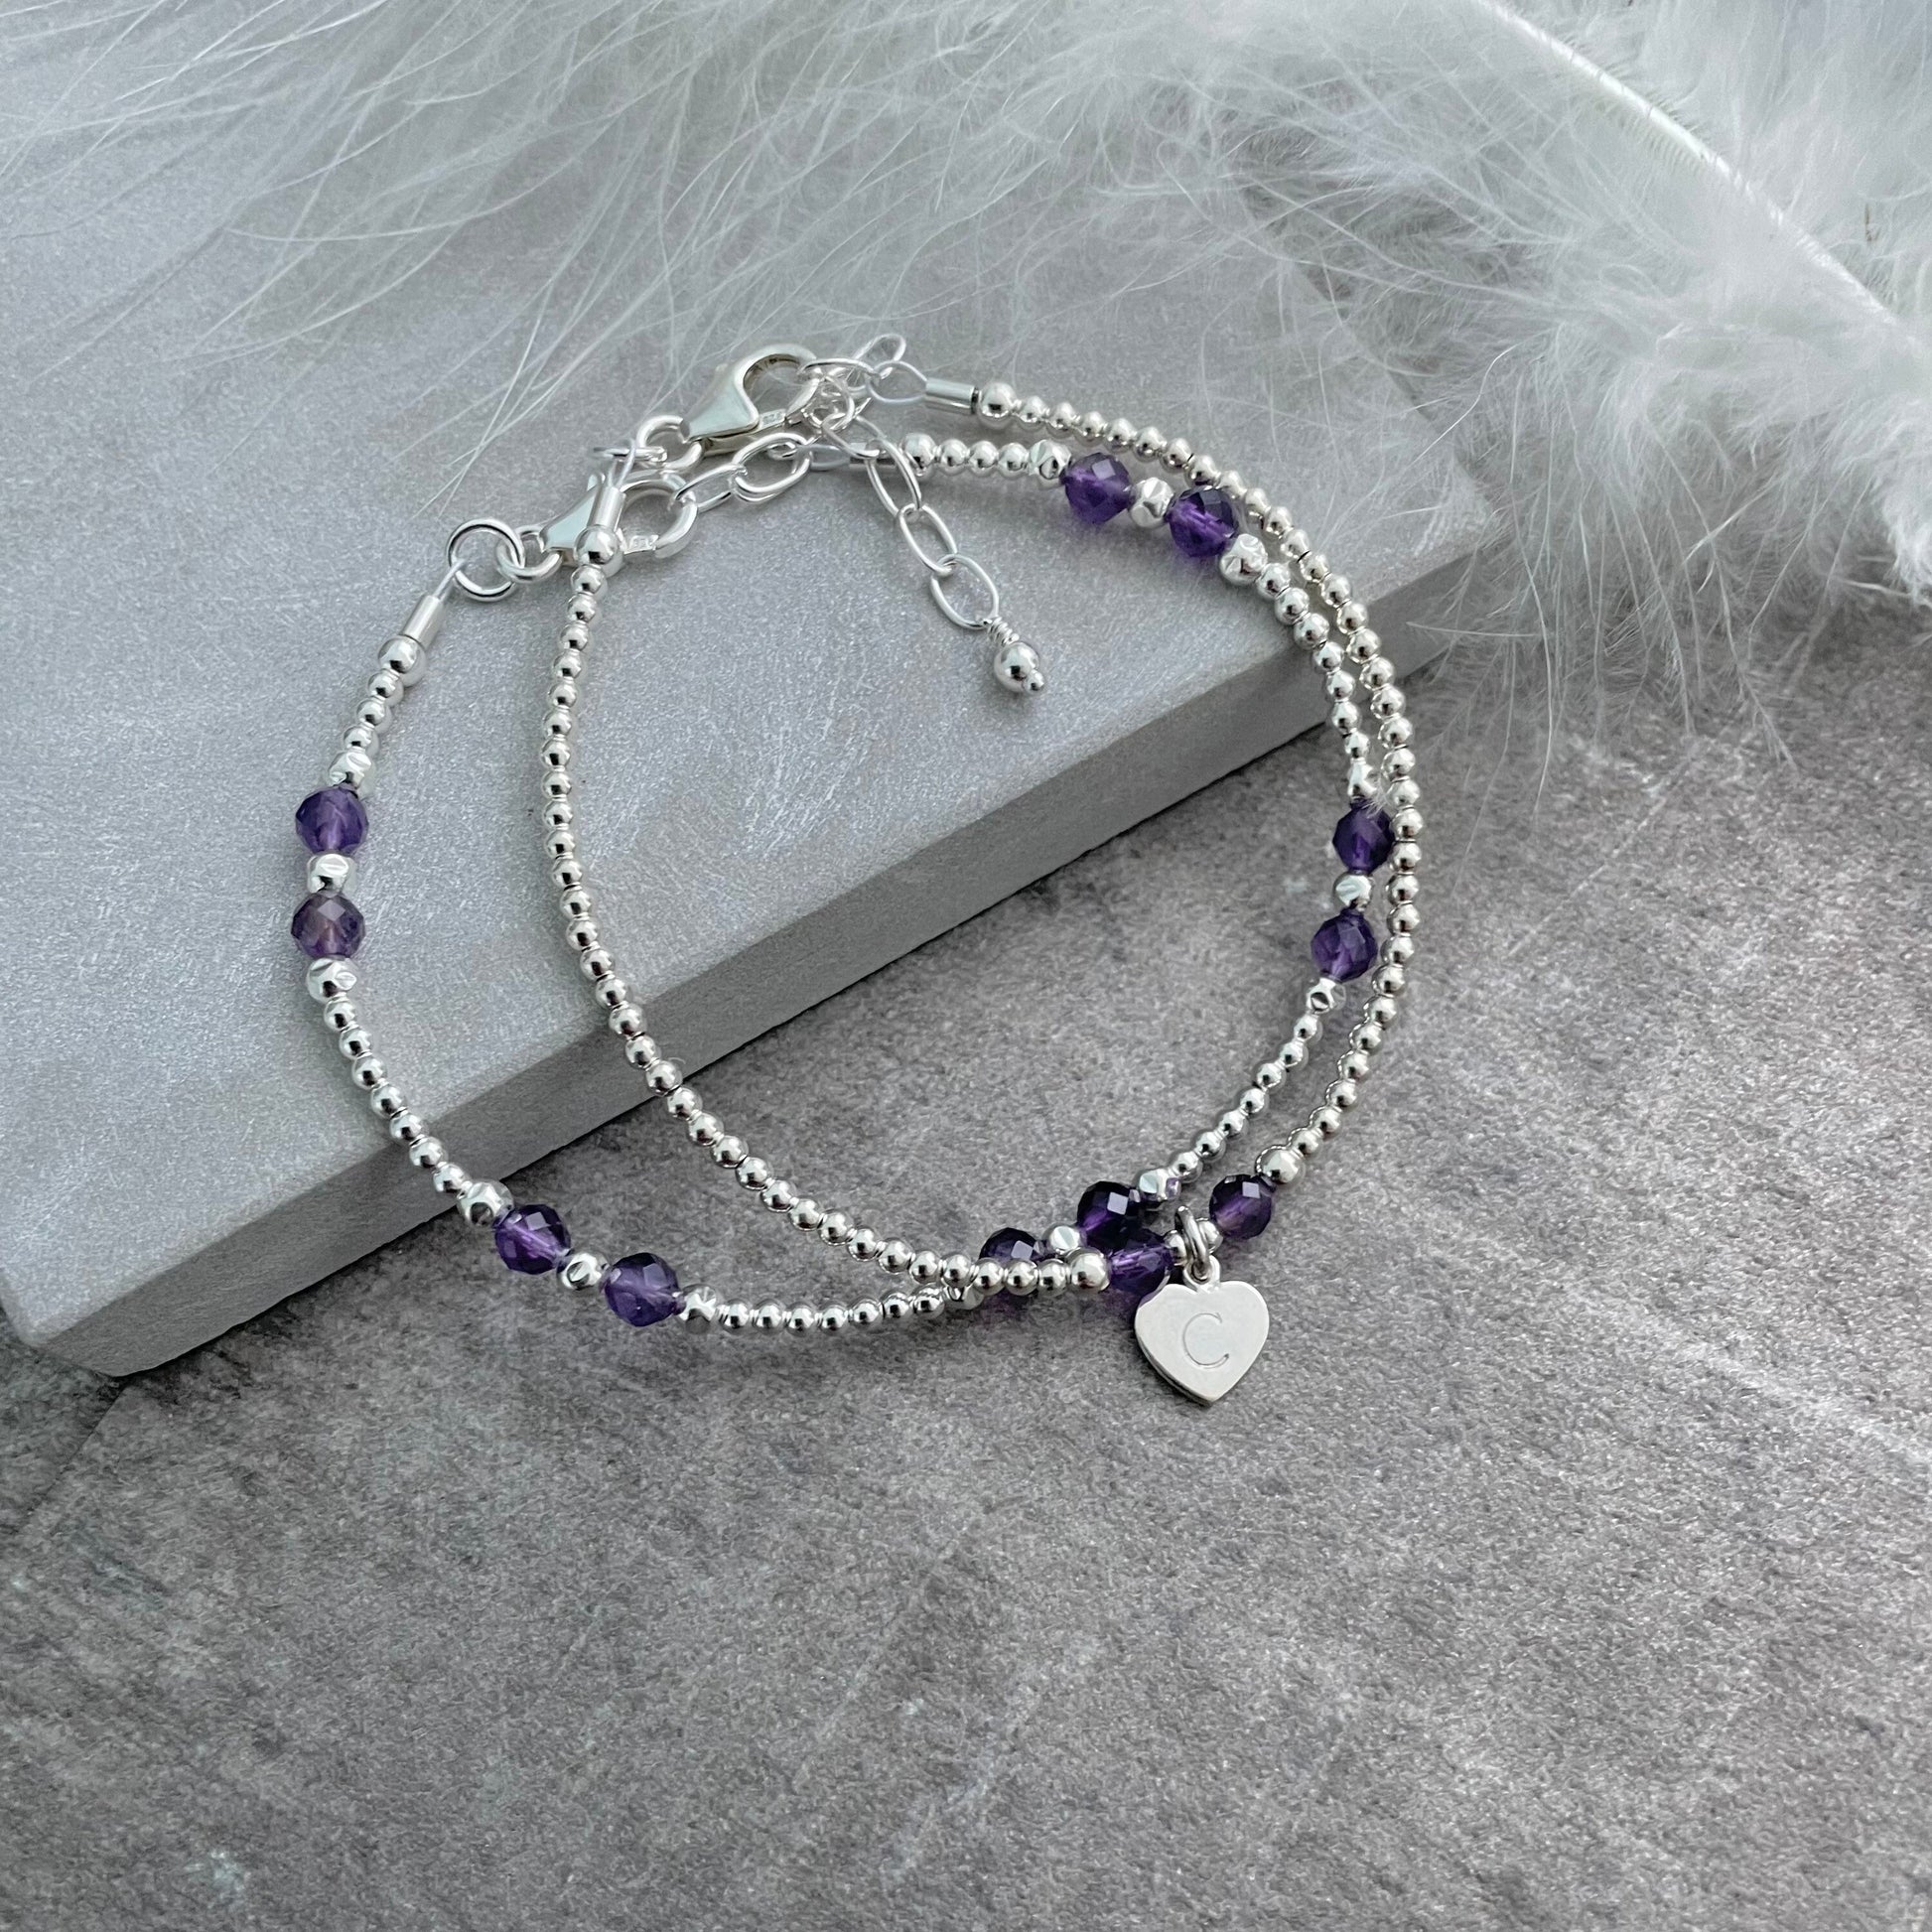 Personalised Bracelet Set with Amethyst, February Birthstone Jewellery